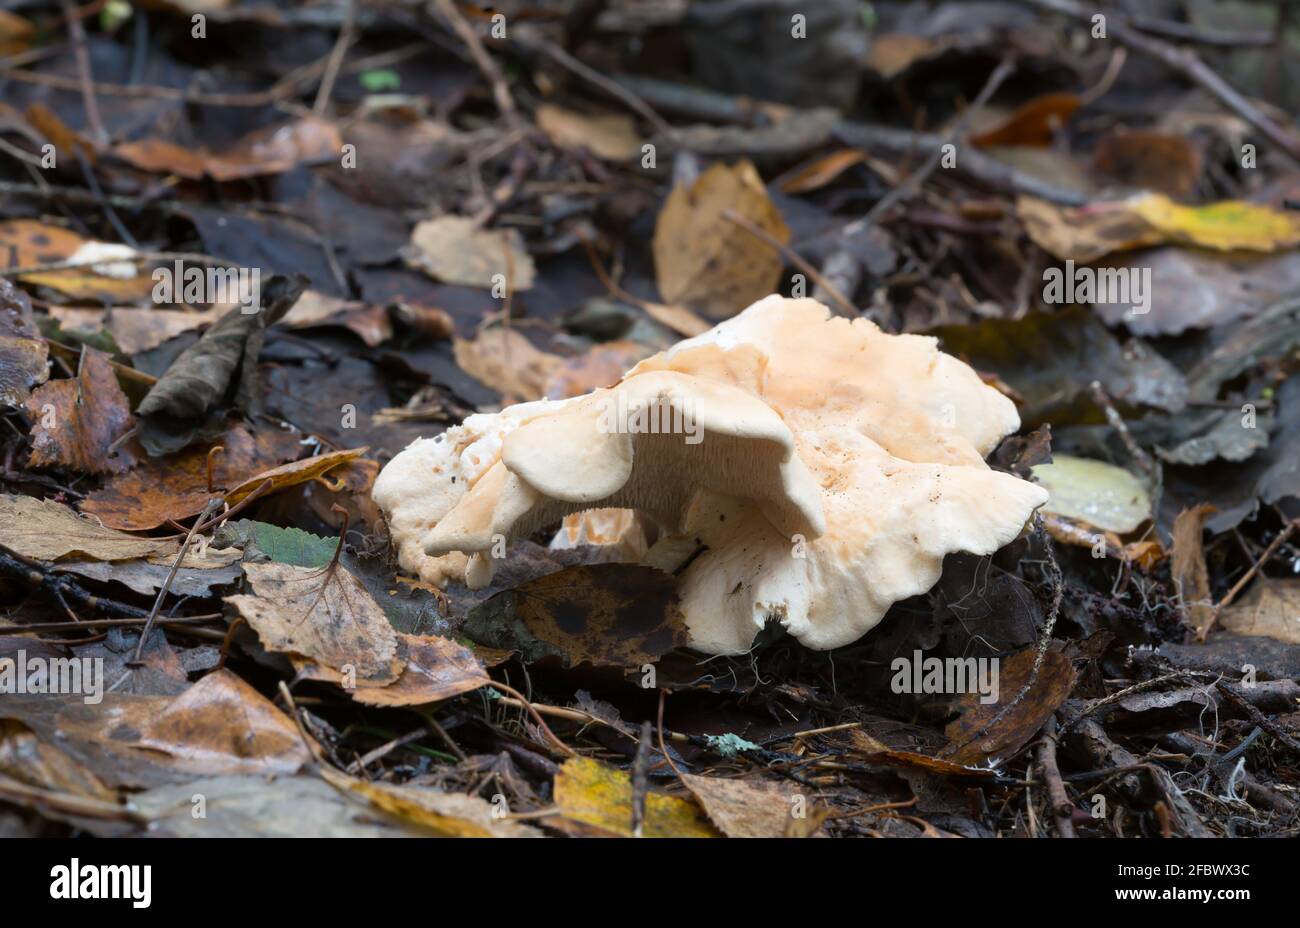 Edible mushroom wood hedgehog, Hydnum repandum growing among leafs Stock Photo